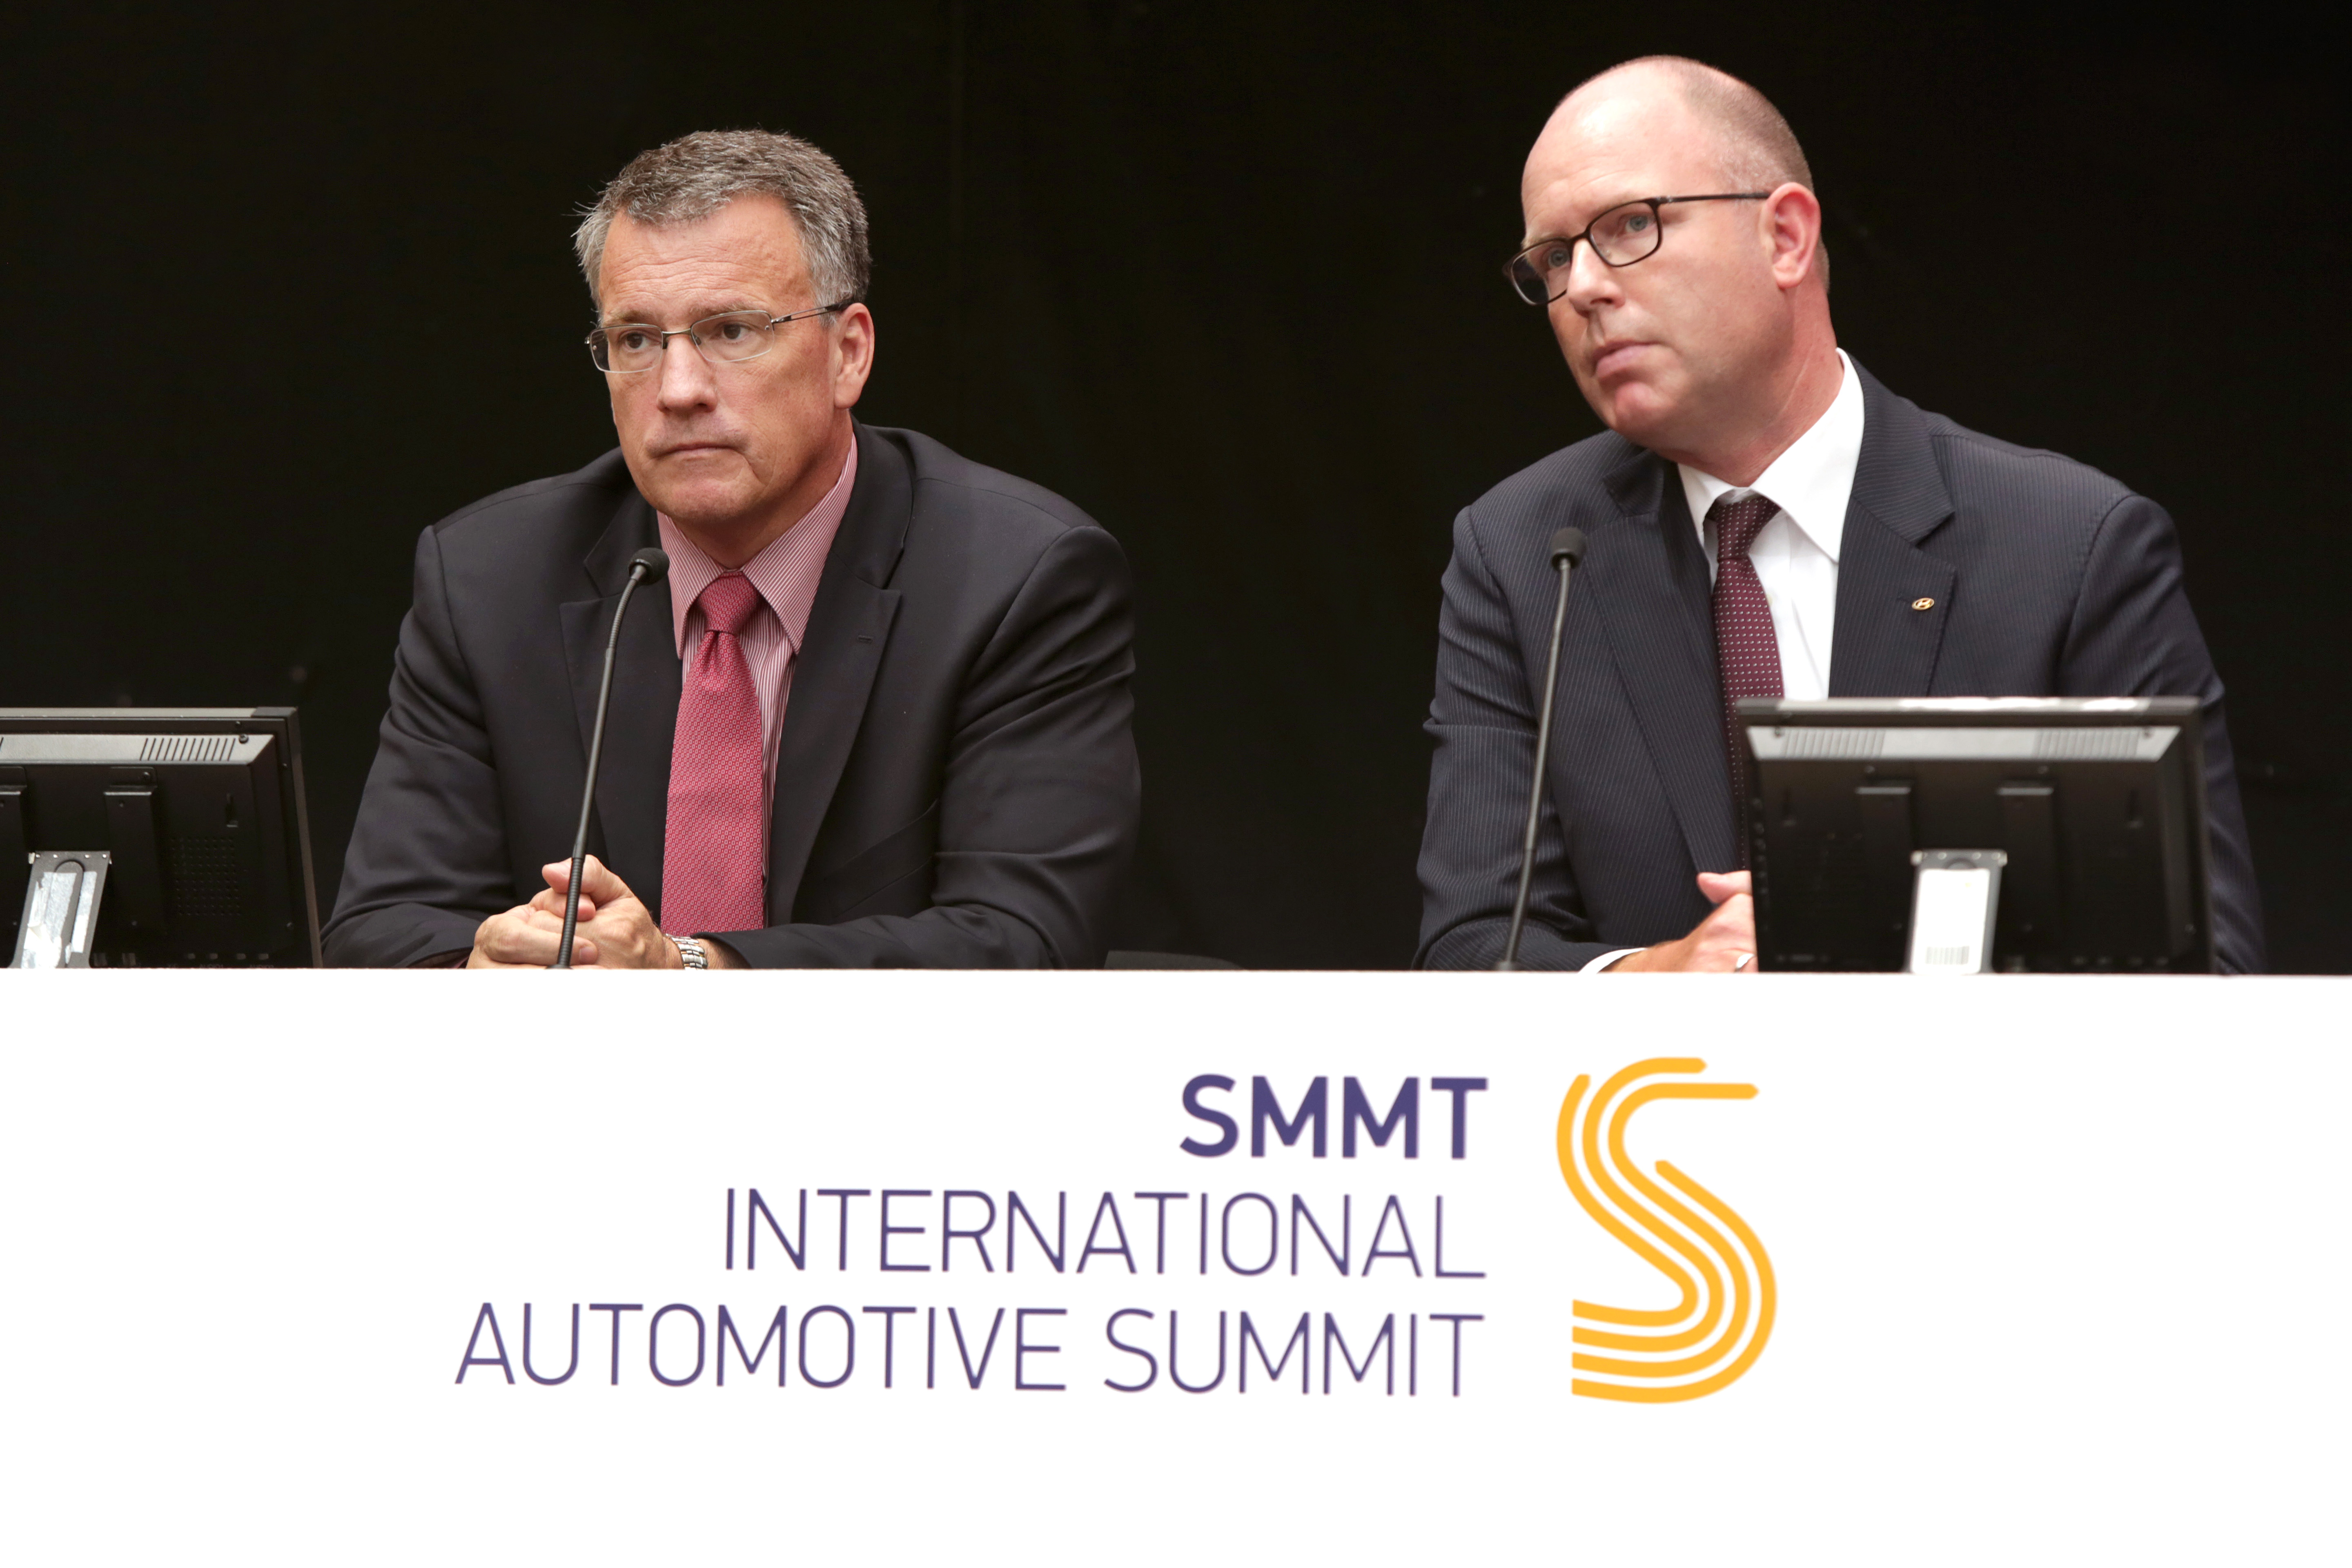 SMMT International Automotive Summit